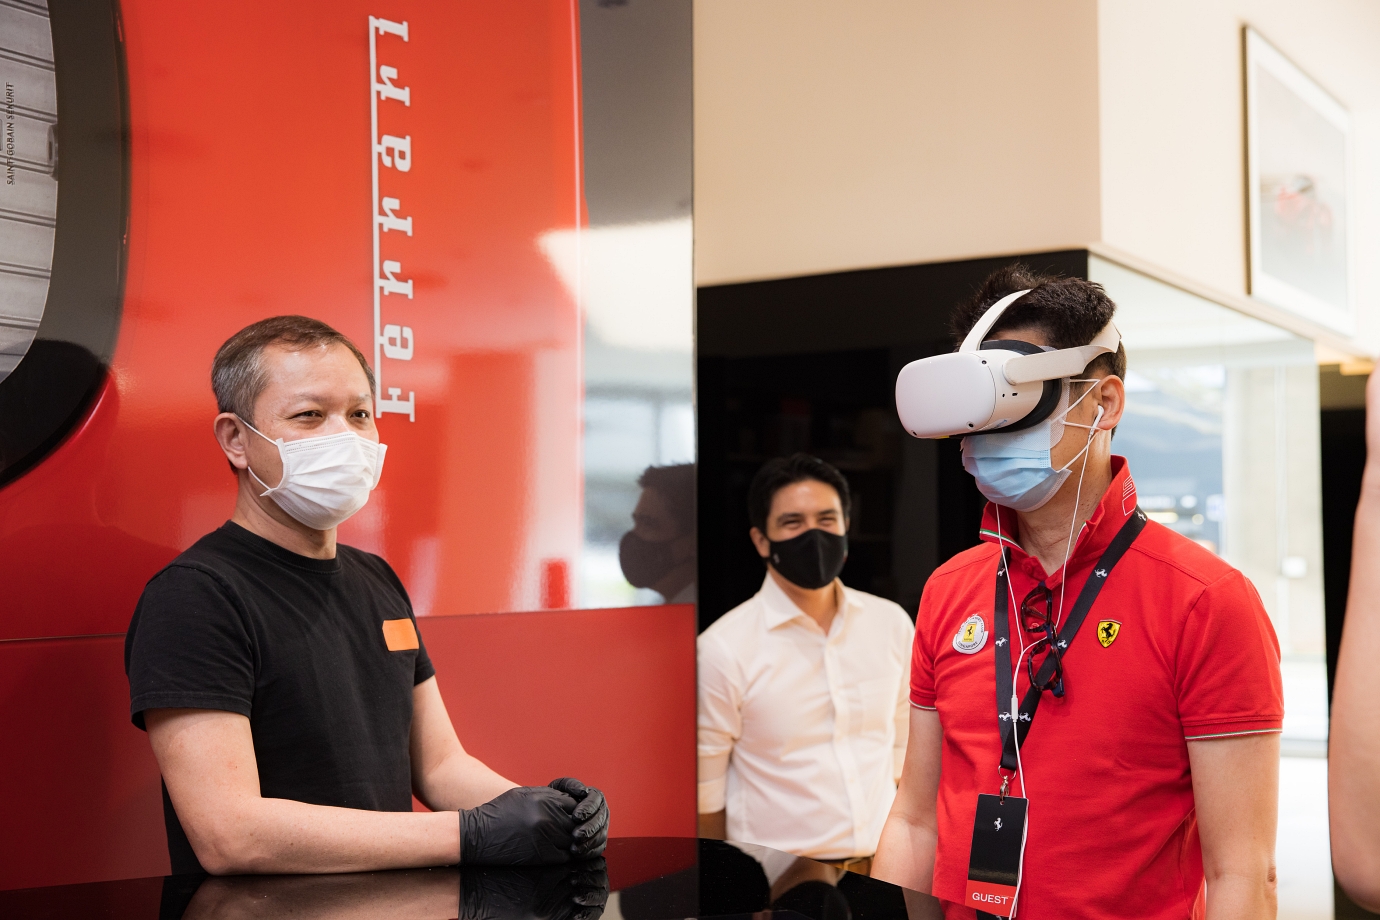 VR goggles transport you into the heart of the Ferrari factory in Maranello